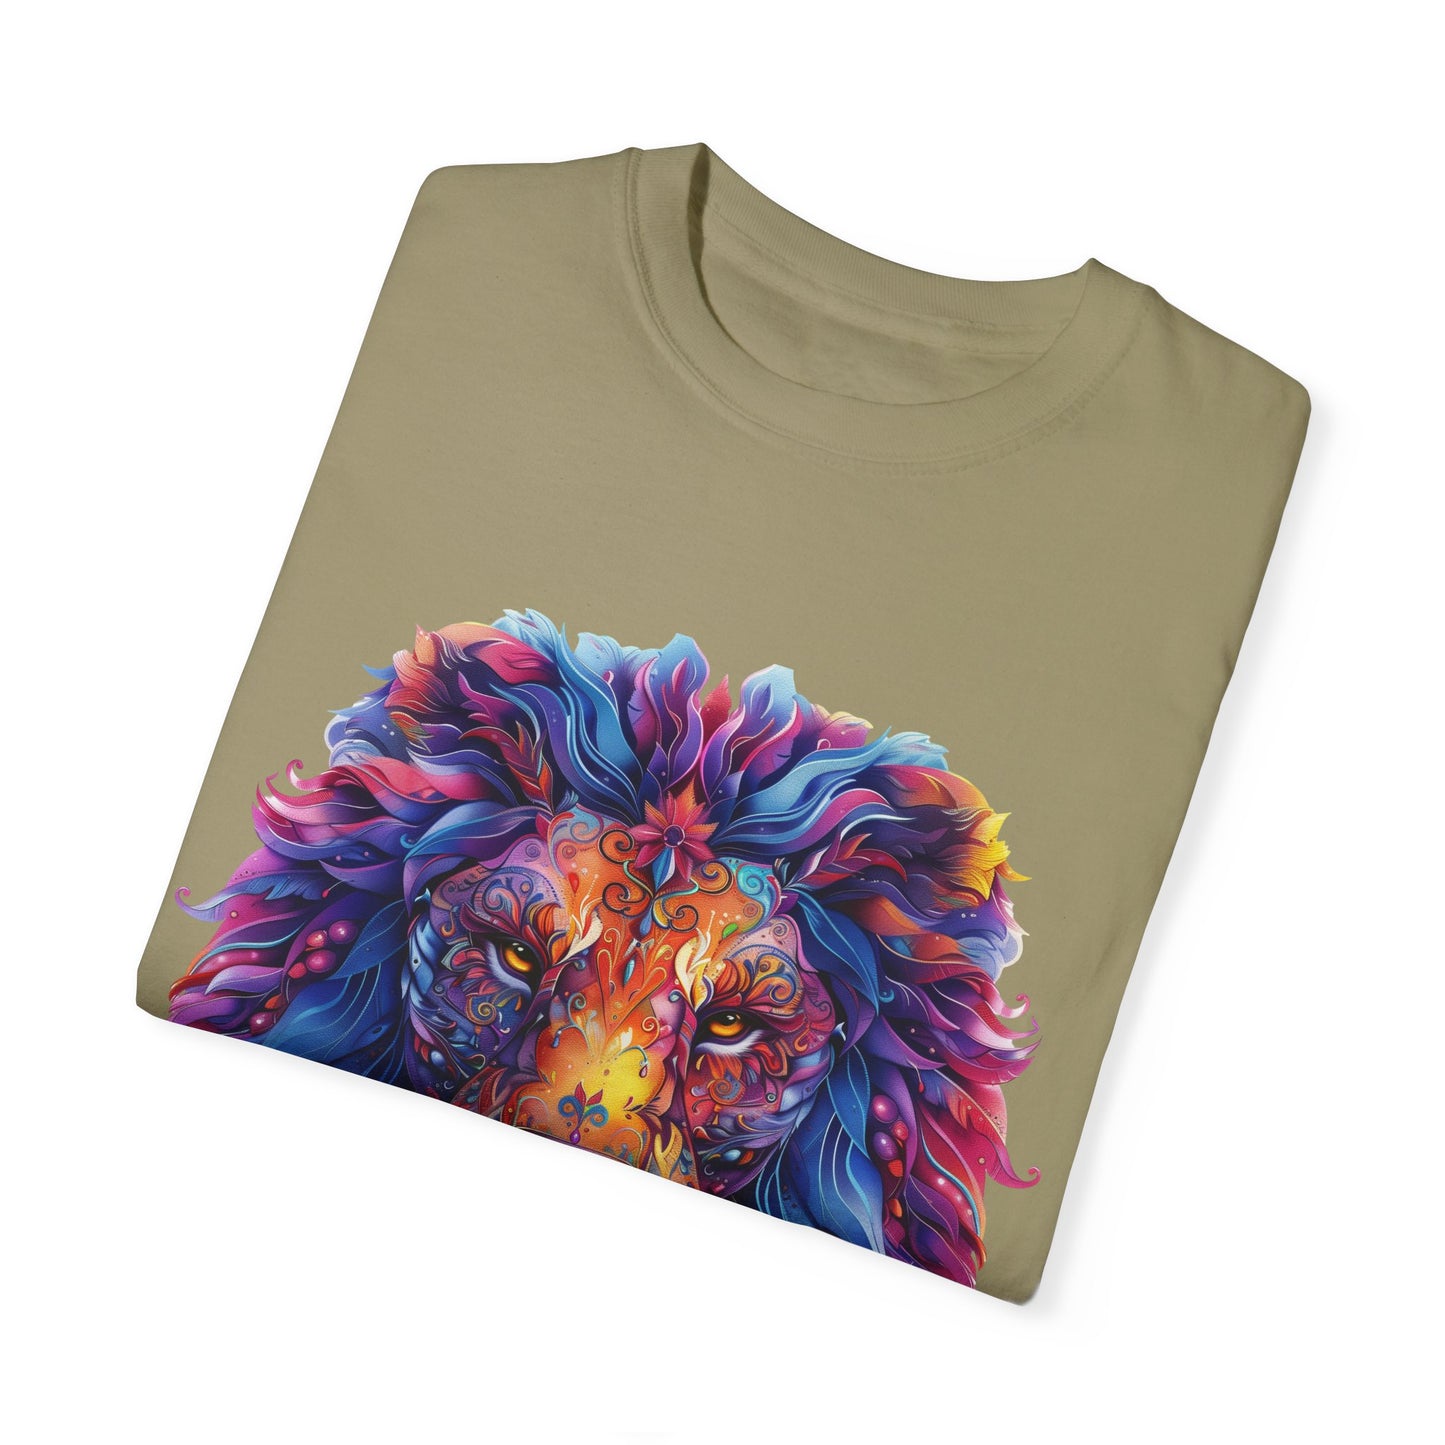 Lion Head Cool Graphic Design Novelty Unisex Garment-dyed T-shirt Cotton Funny Humorous Graphic Soft Premium Unisex Men Women Khaki T-shirt Birthday Gift-47